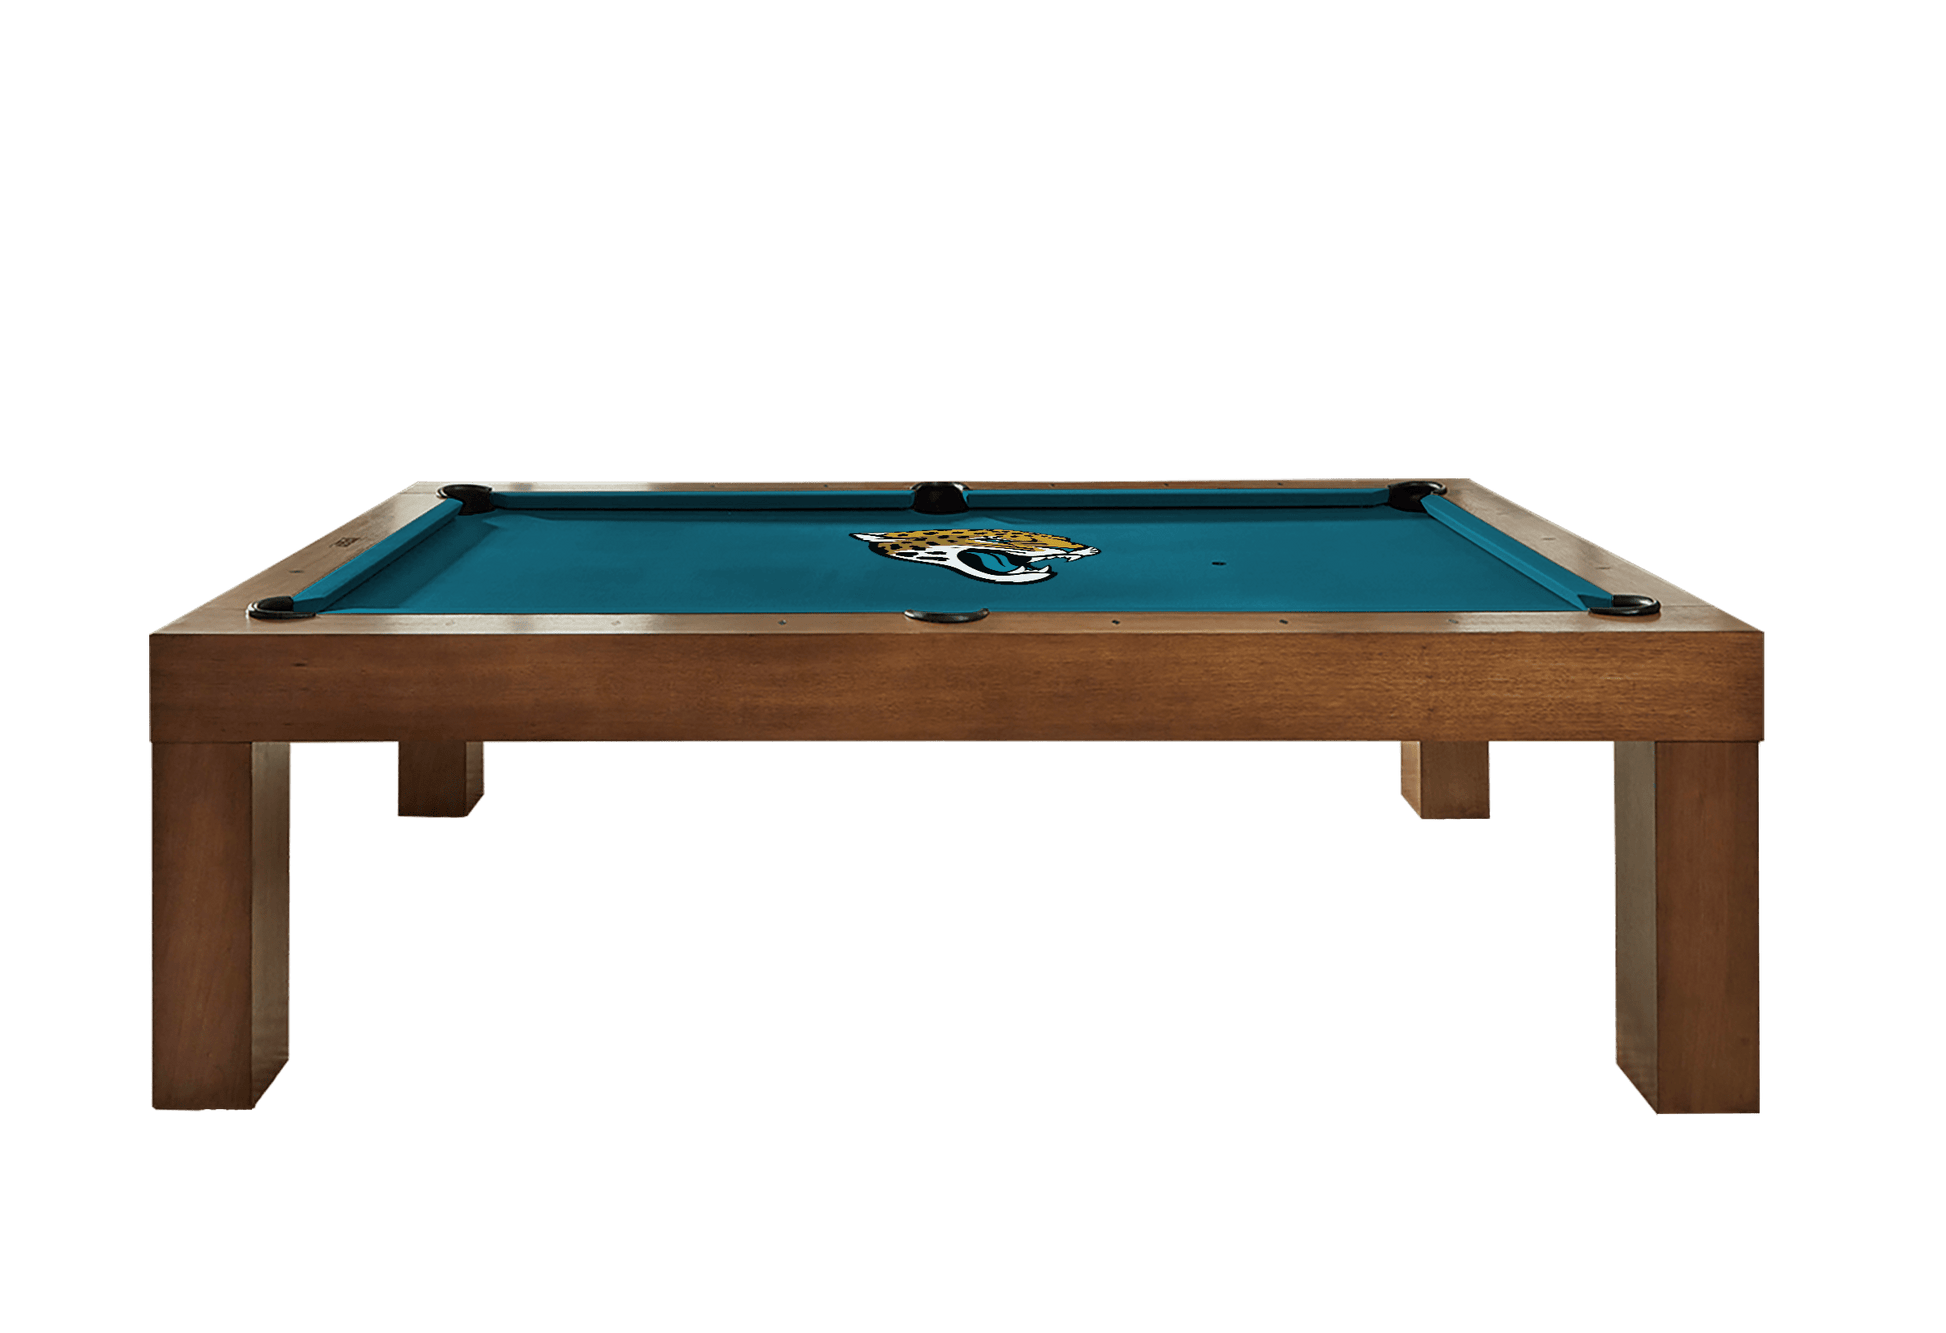 Jacksonville Jaguars Premium Pool Table Bundle - Walnut Pool Bundle Home Arcade Games   